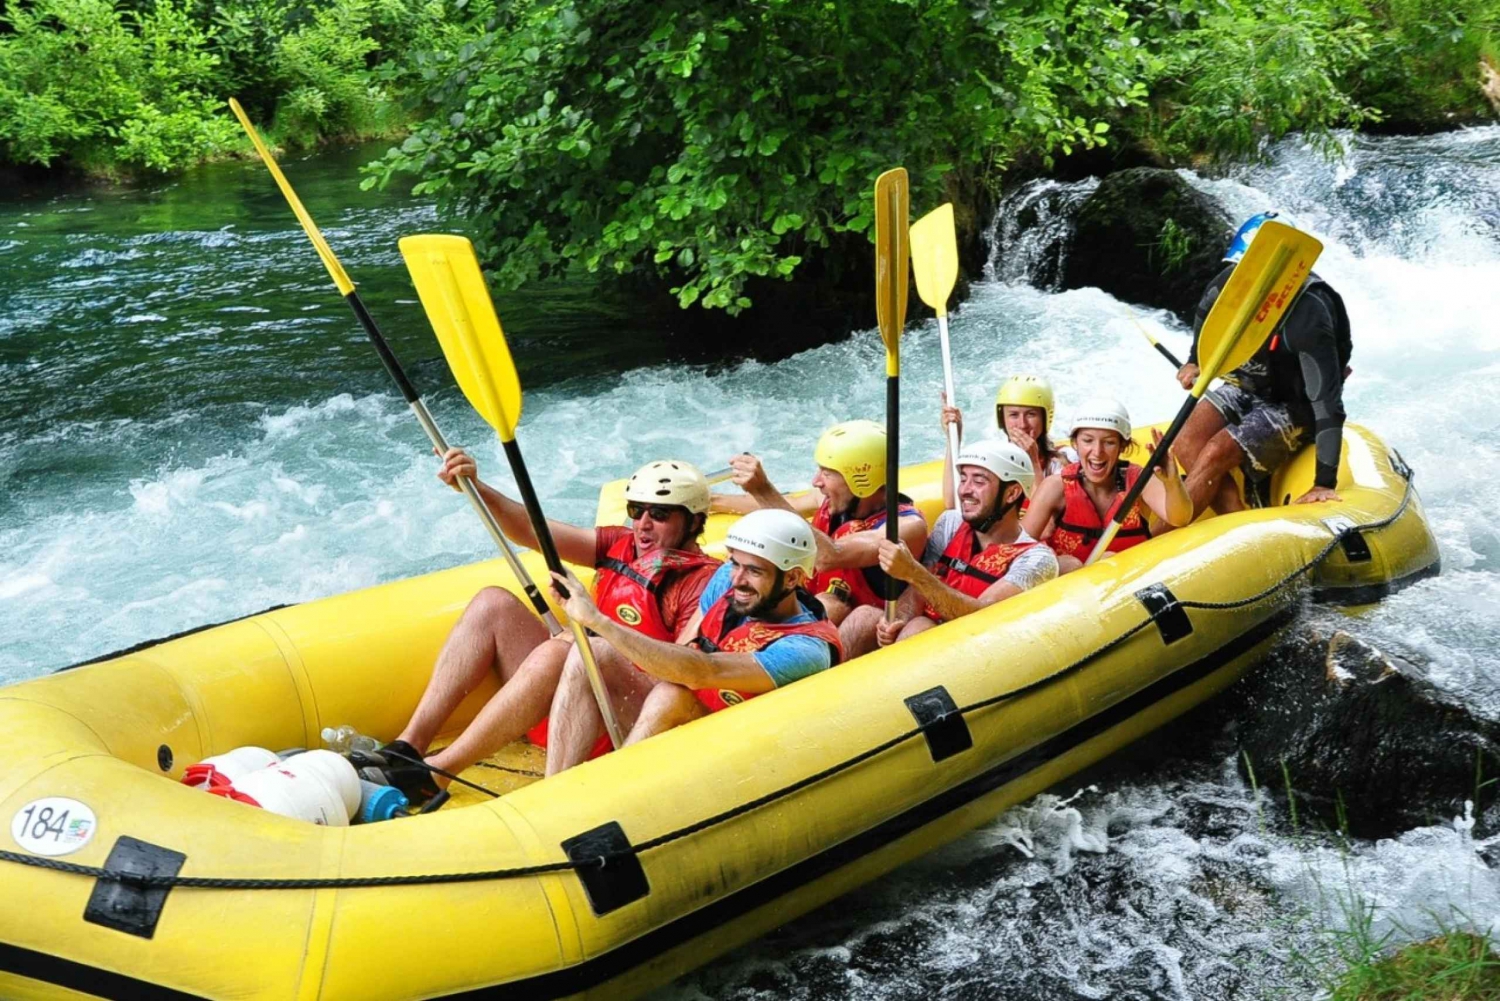 Omišista/Splitistä: Cetina River Rafting Experience